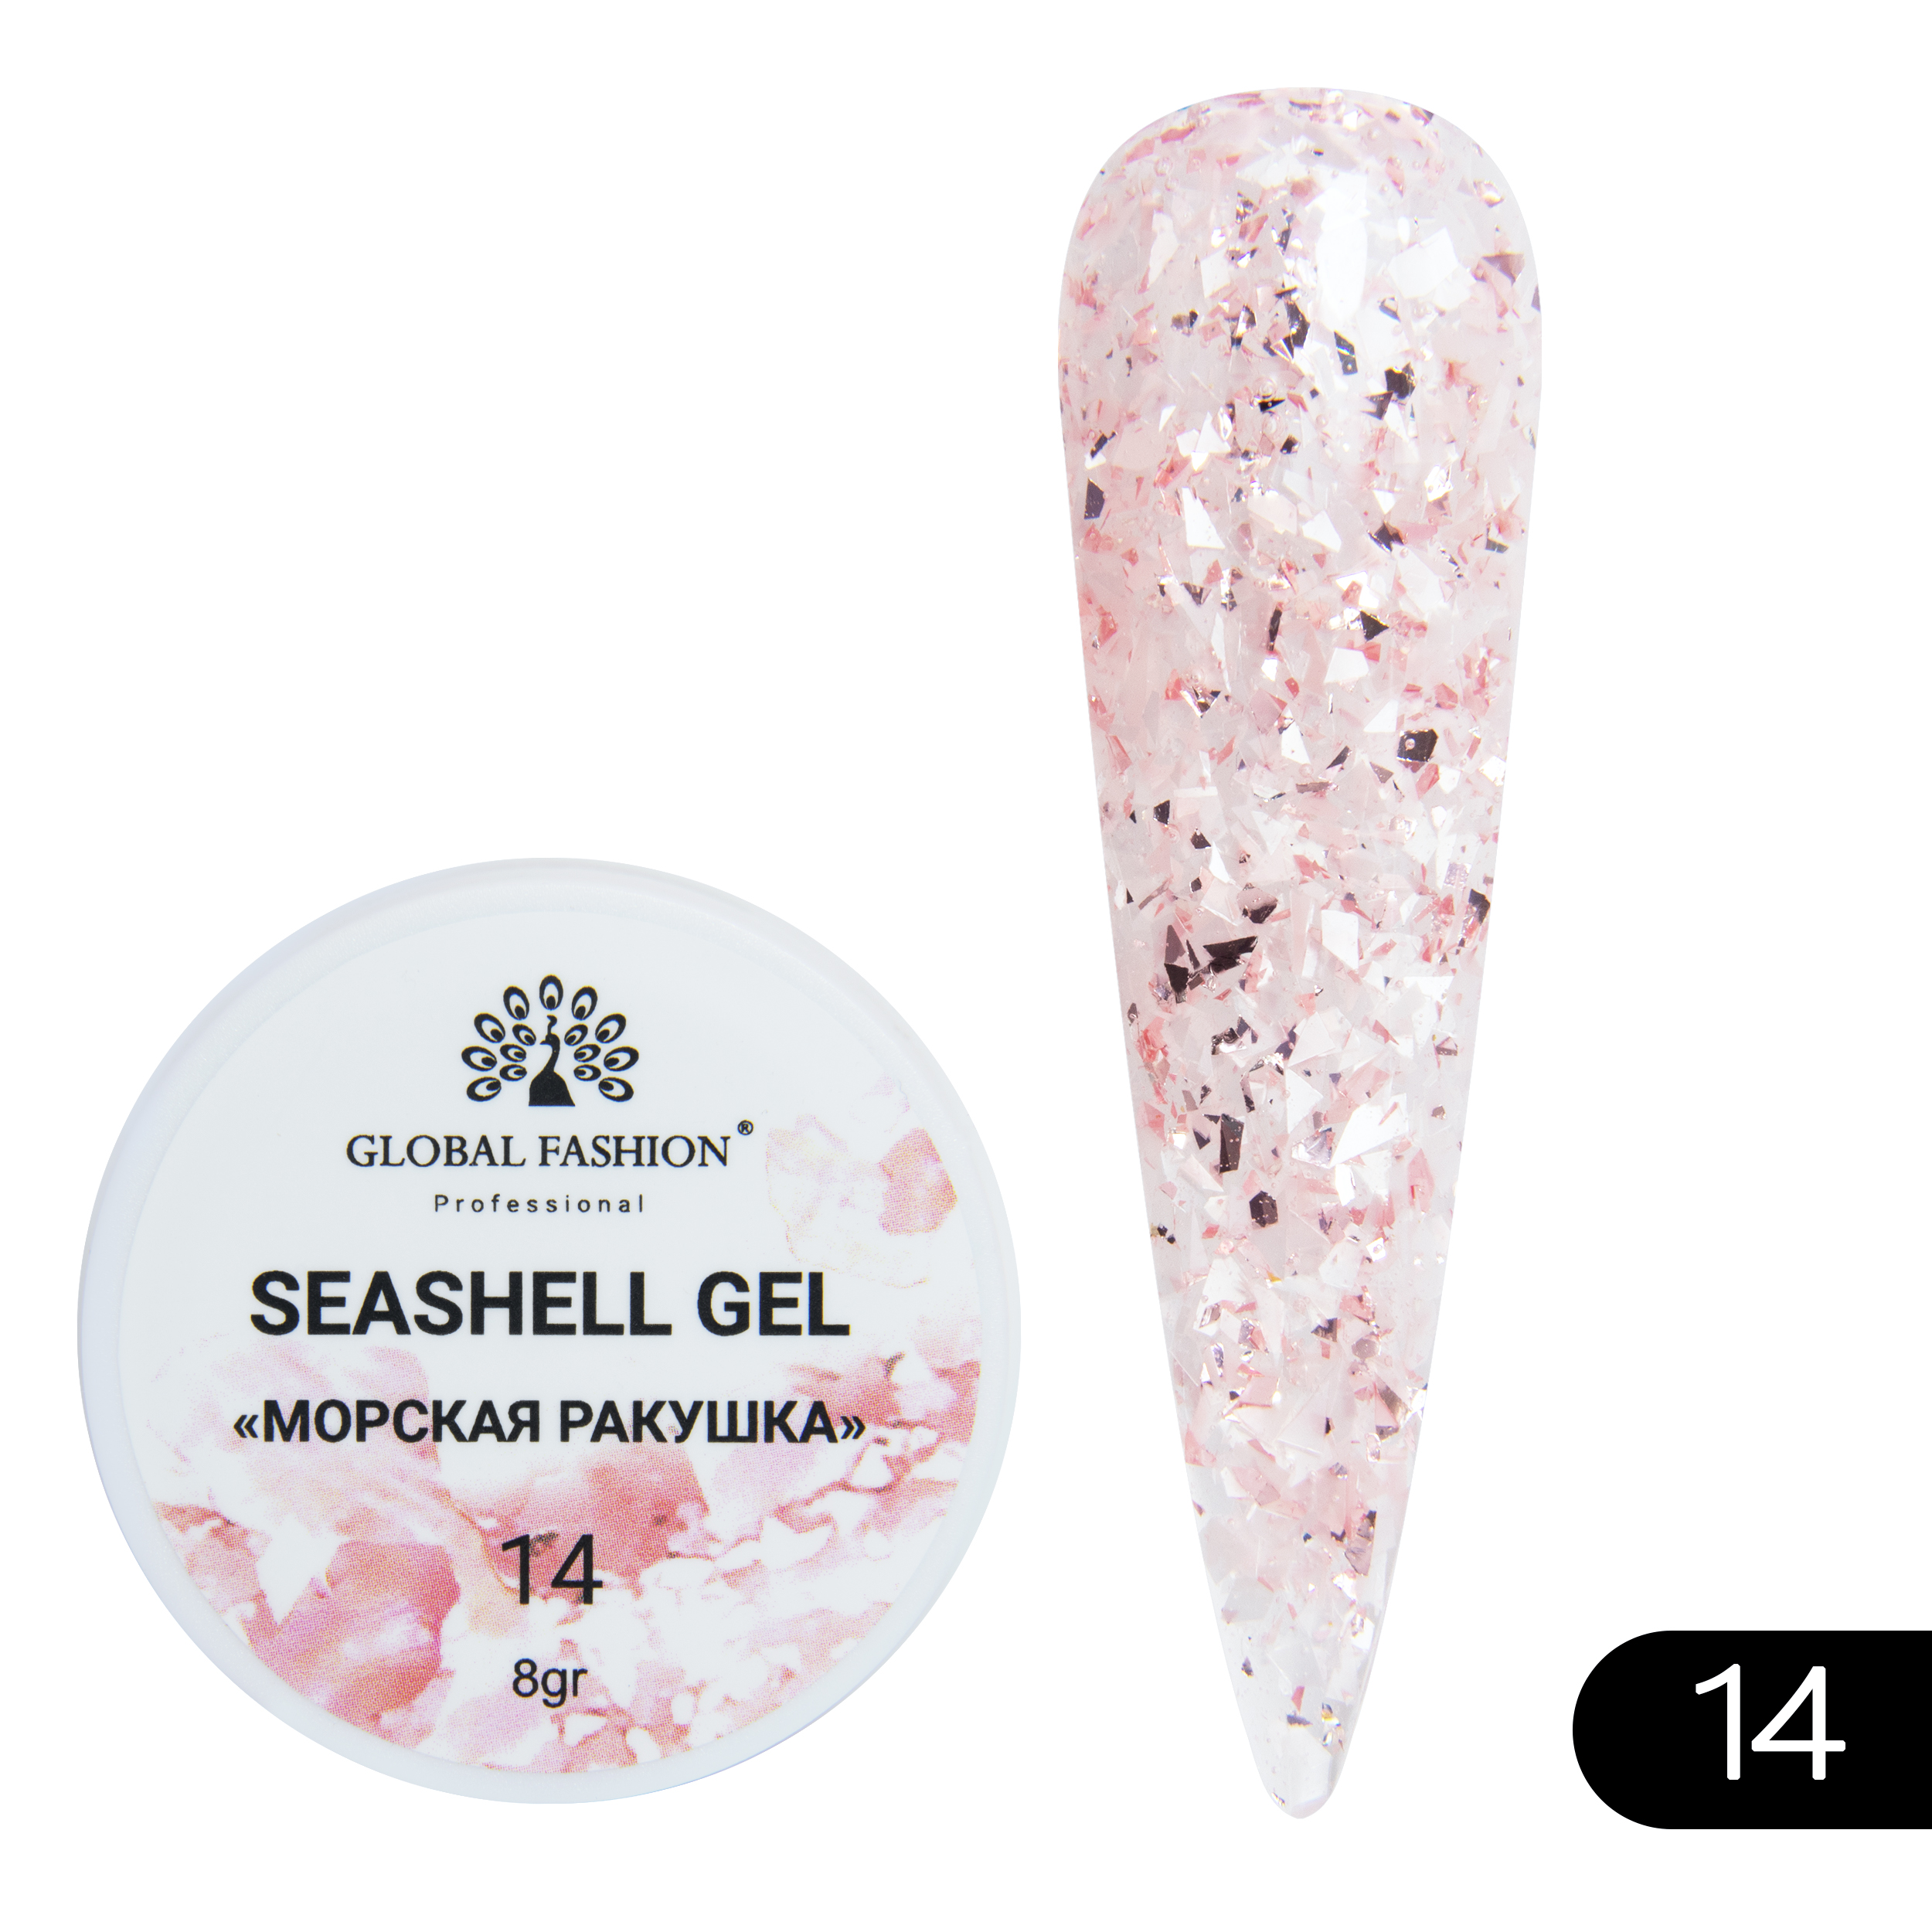 Гель-краска Global Fashion для ногтей с мраморным эффектом ракушки №14 Seashell Gel 5 г сачок для аквариумных рыб дарэлл 10 12 см